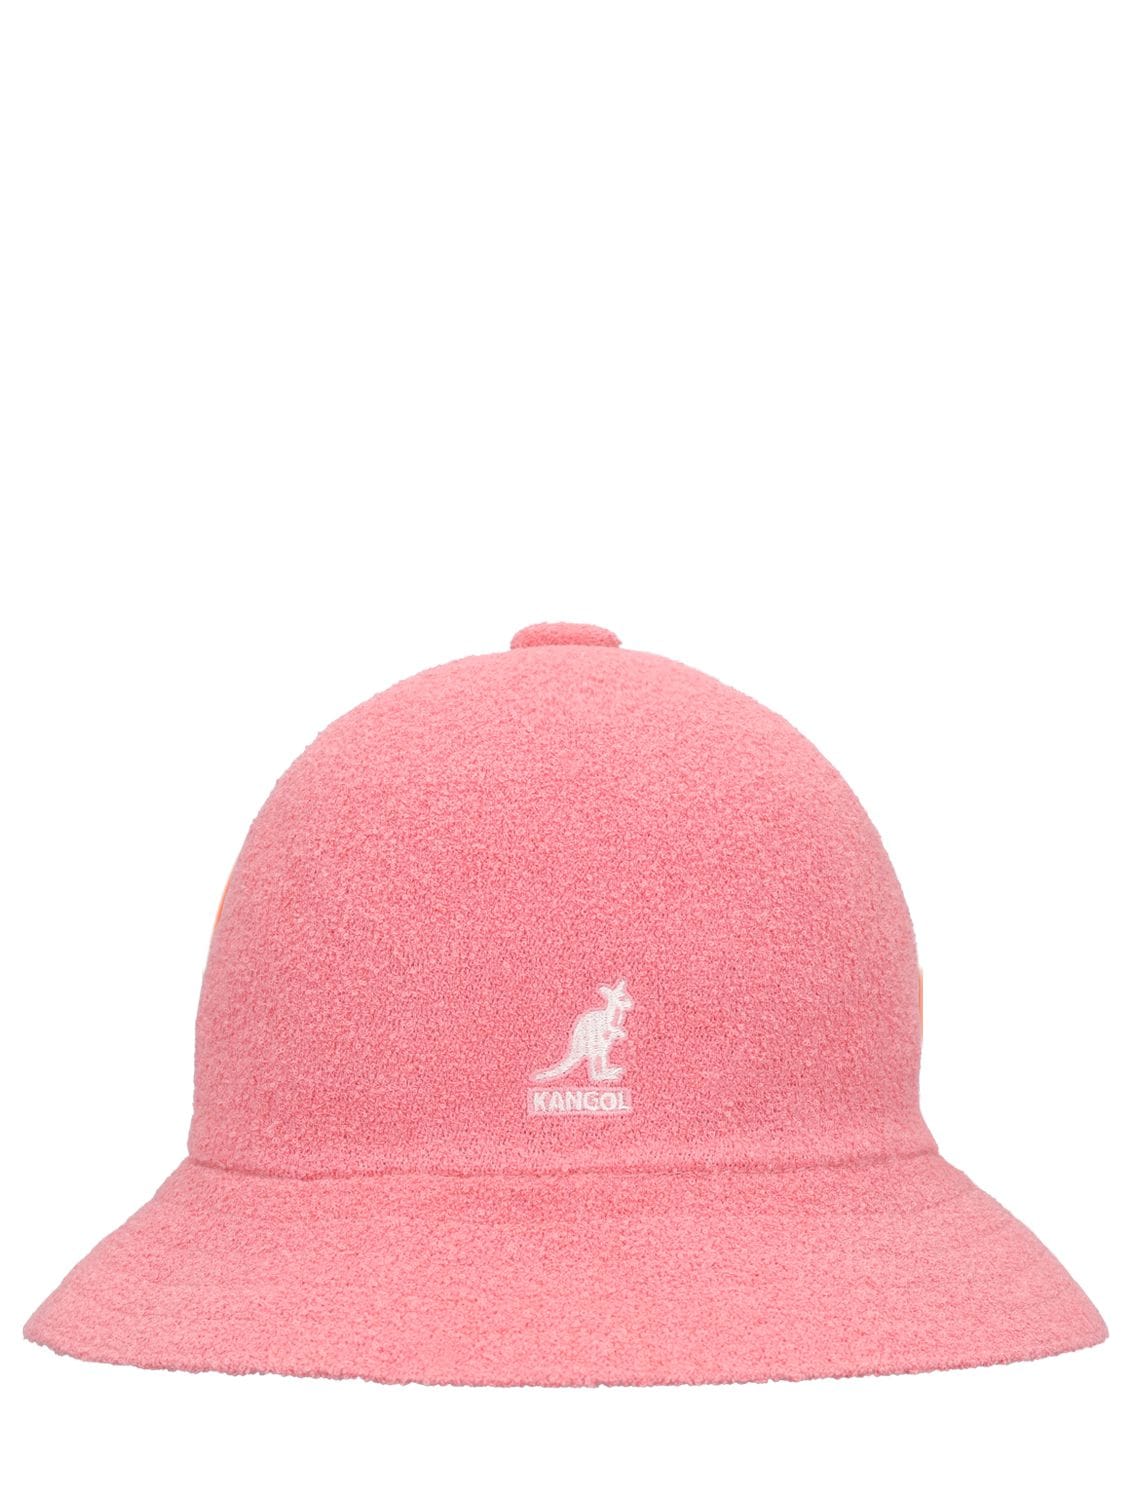 Kangol Bermuda Casual Bucket Hat In Pepto Pink